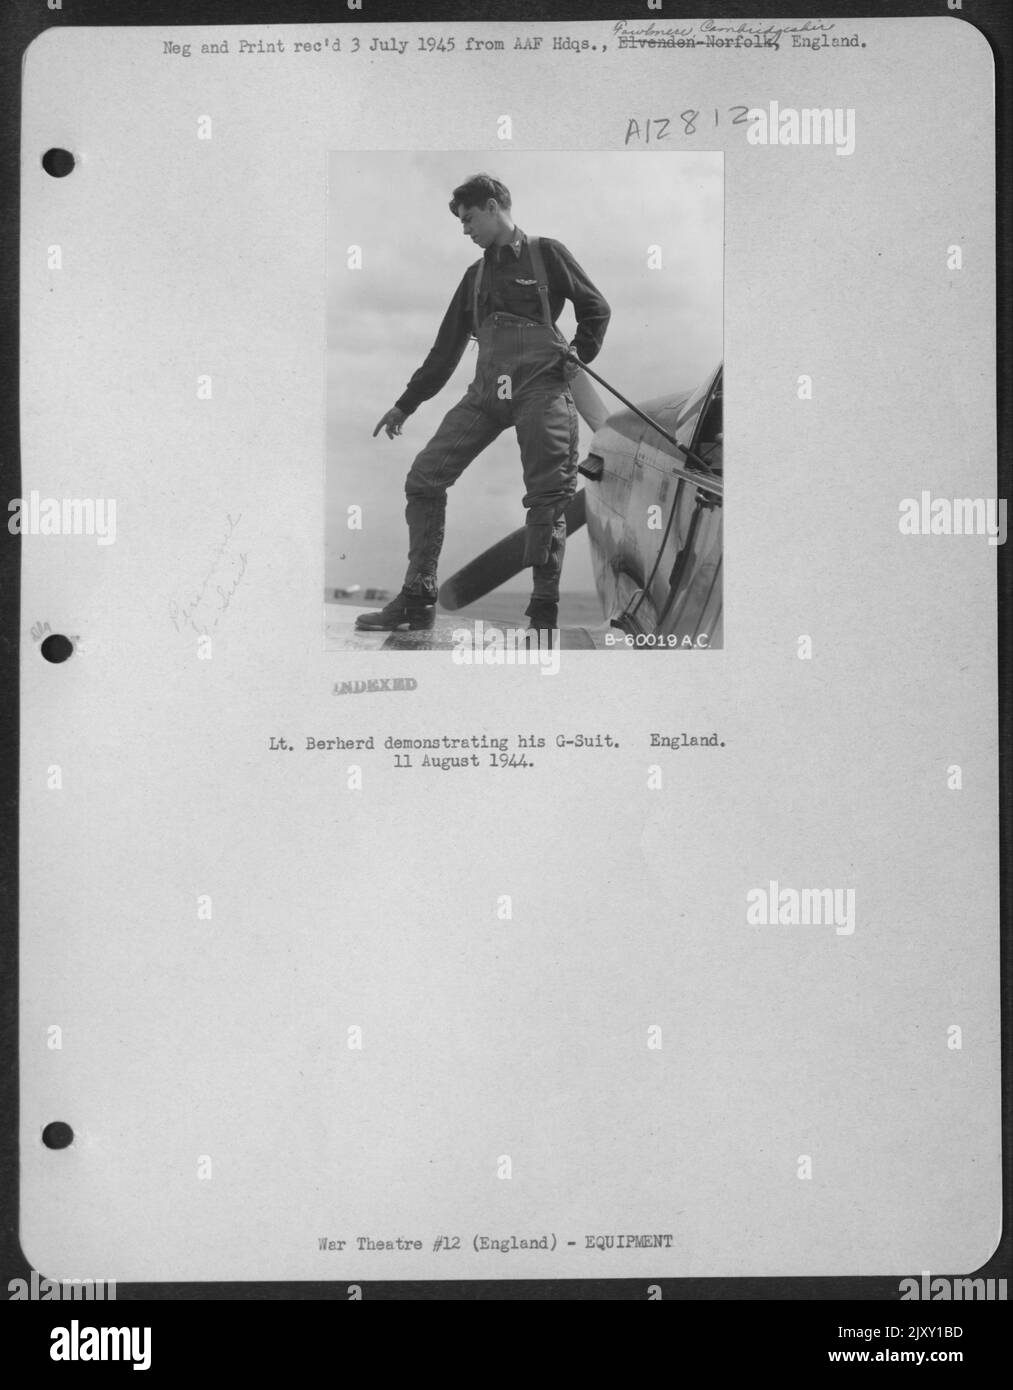 Lt. Berherd Demonstrating His G-Suit. England. 11 August 1944. Stock Photo